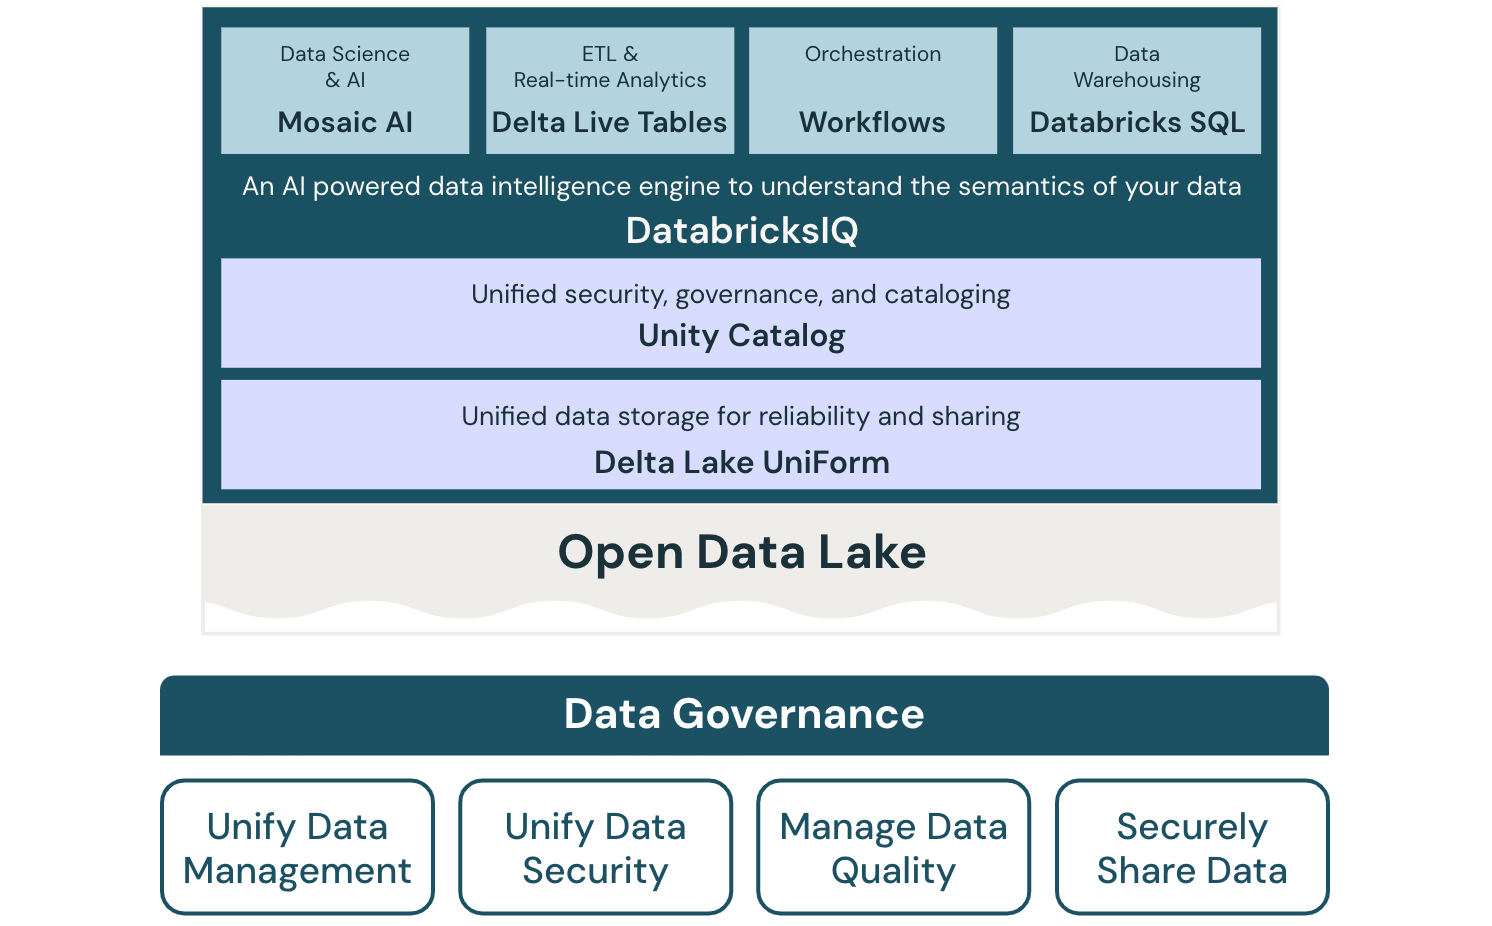 Data governance lakehouse architecture diagram for Databricks.